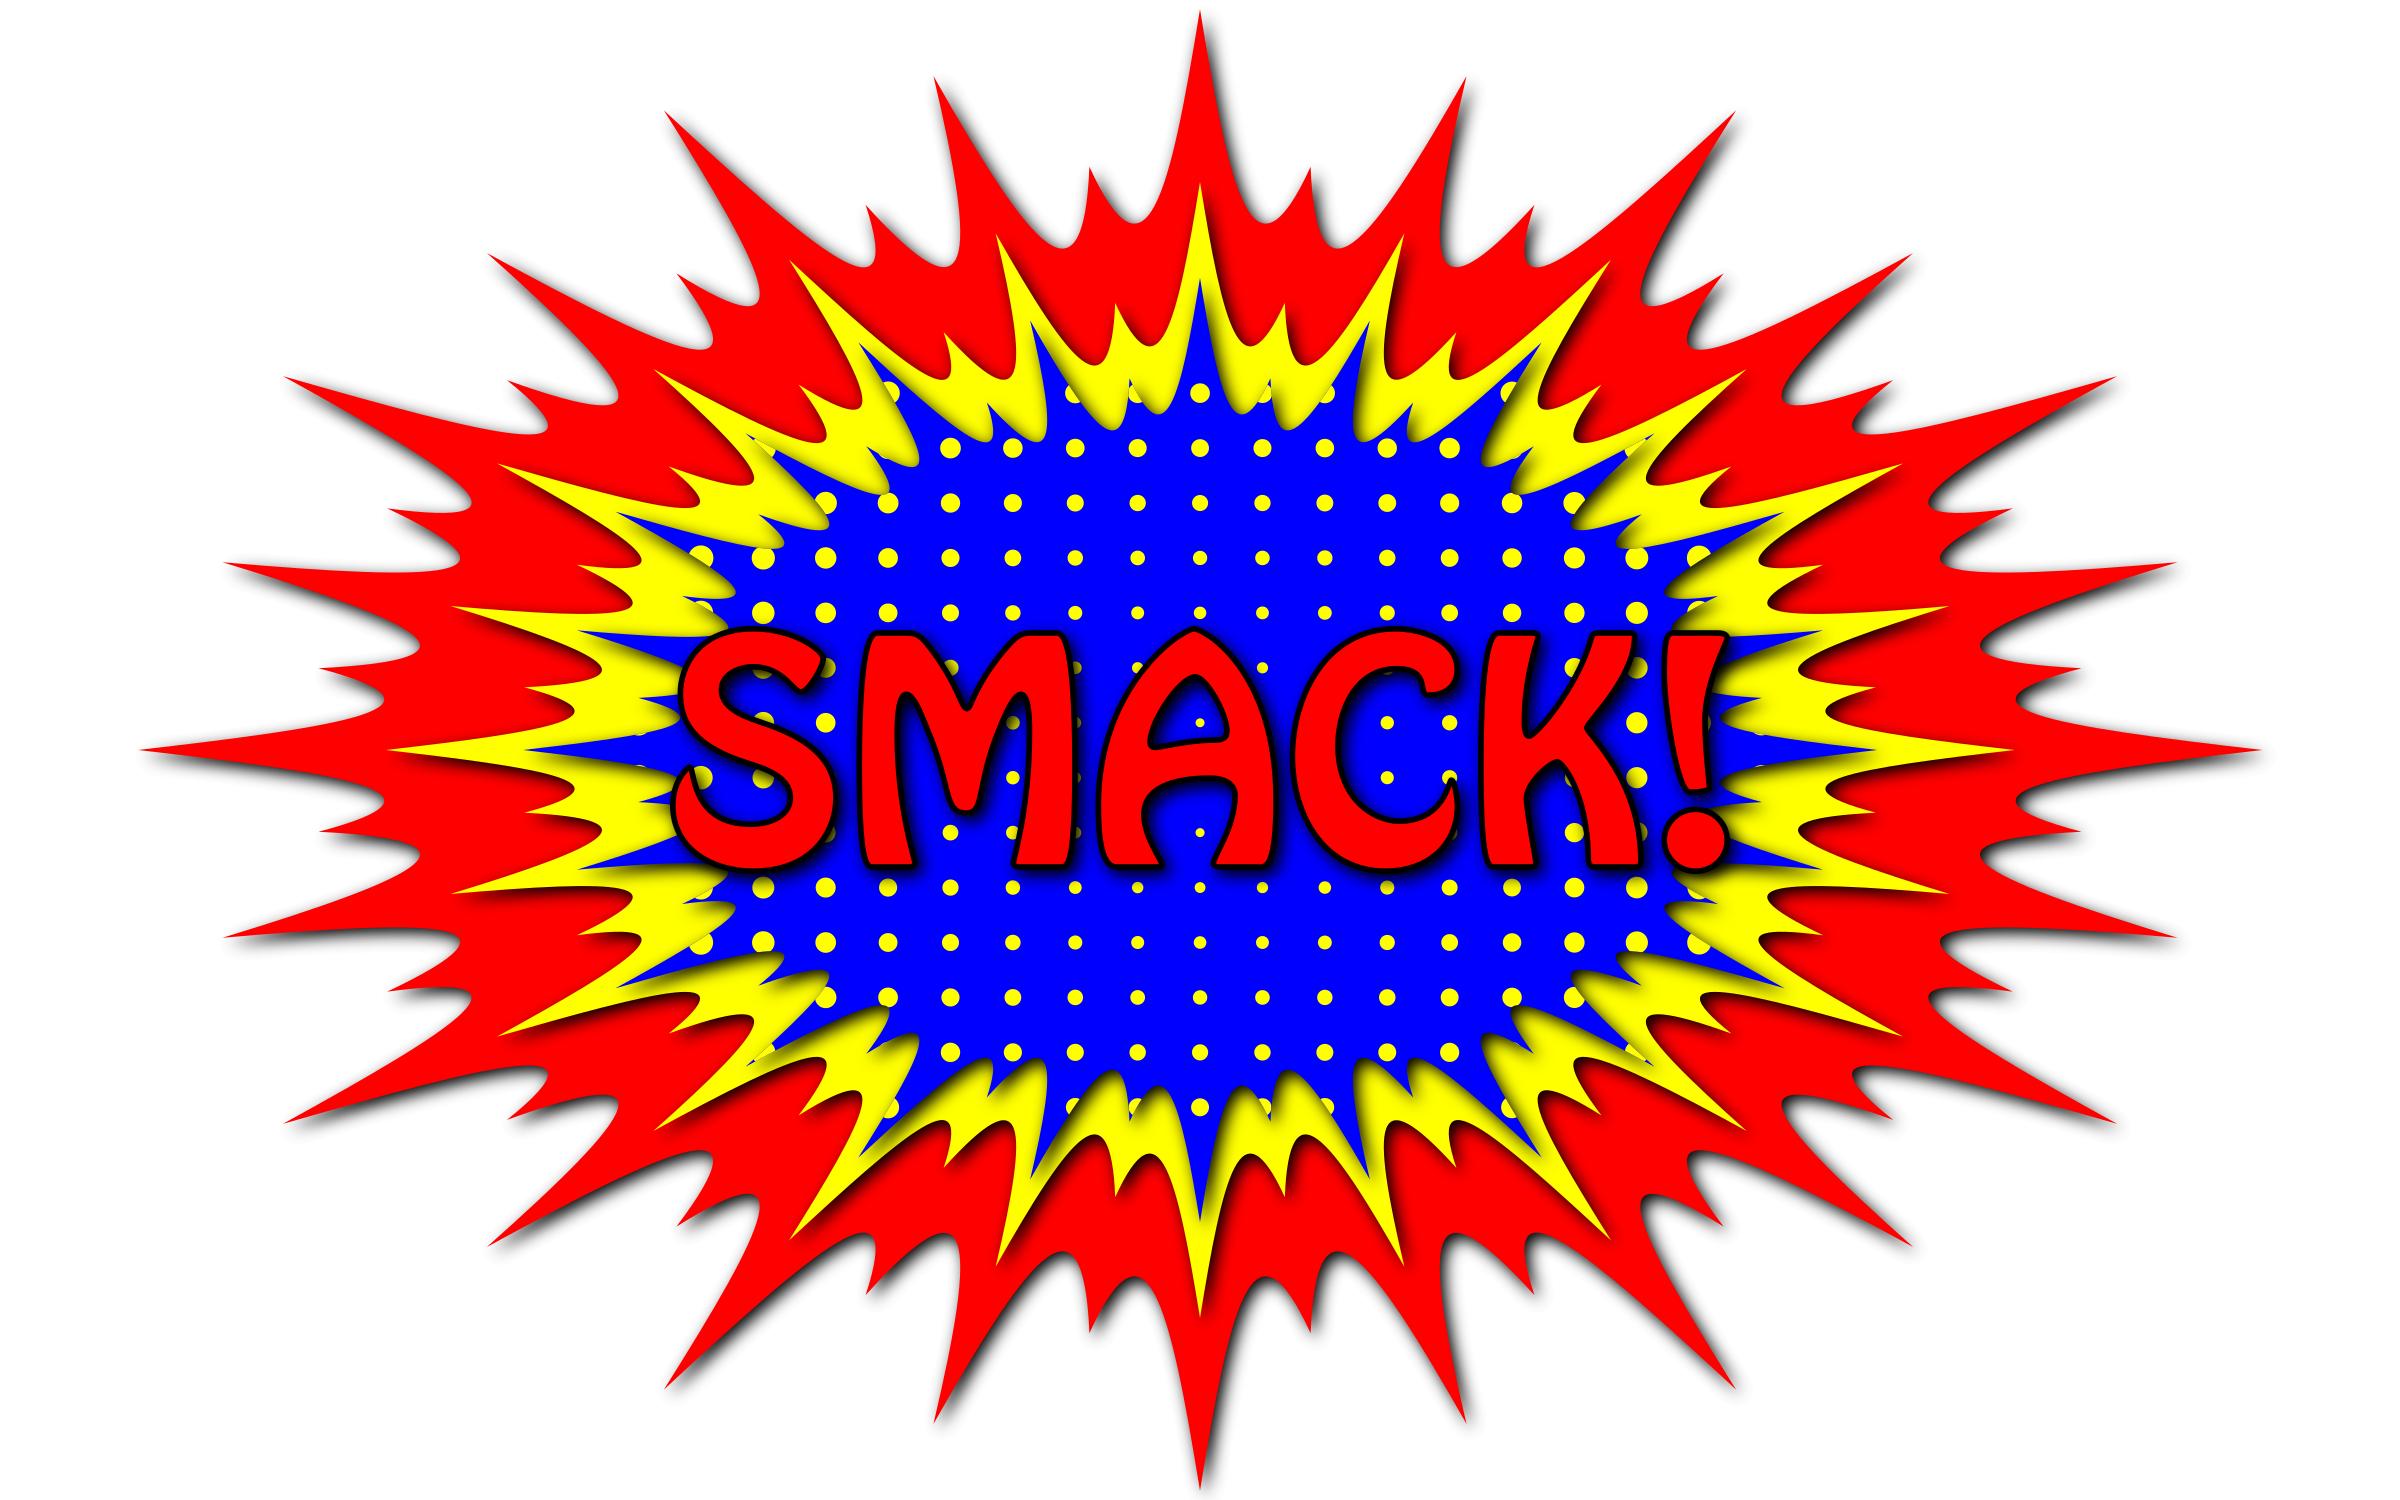 Smack icons